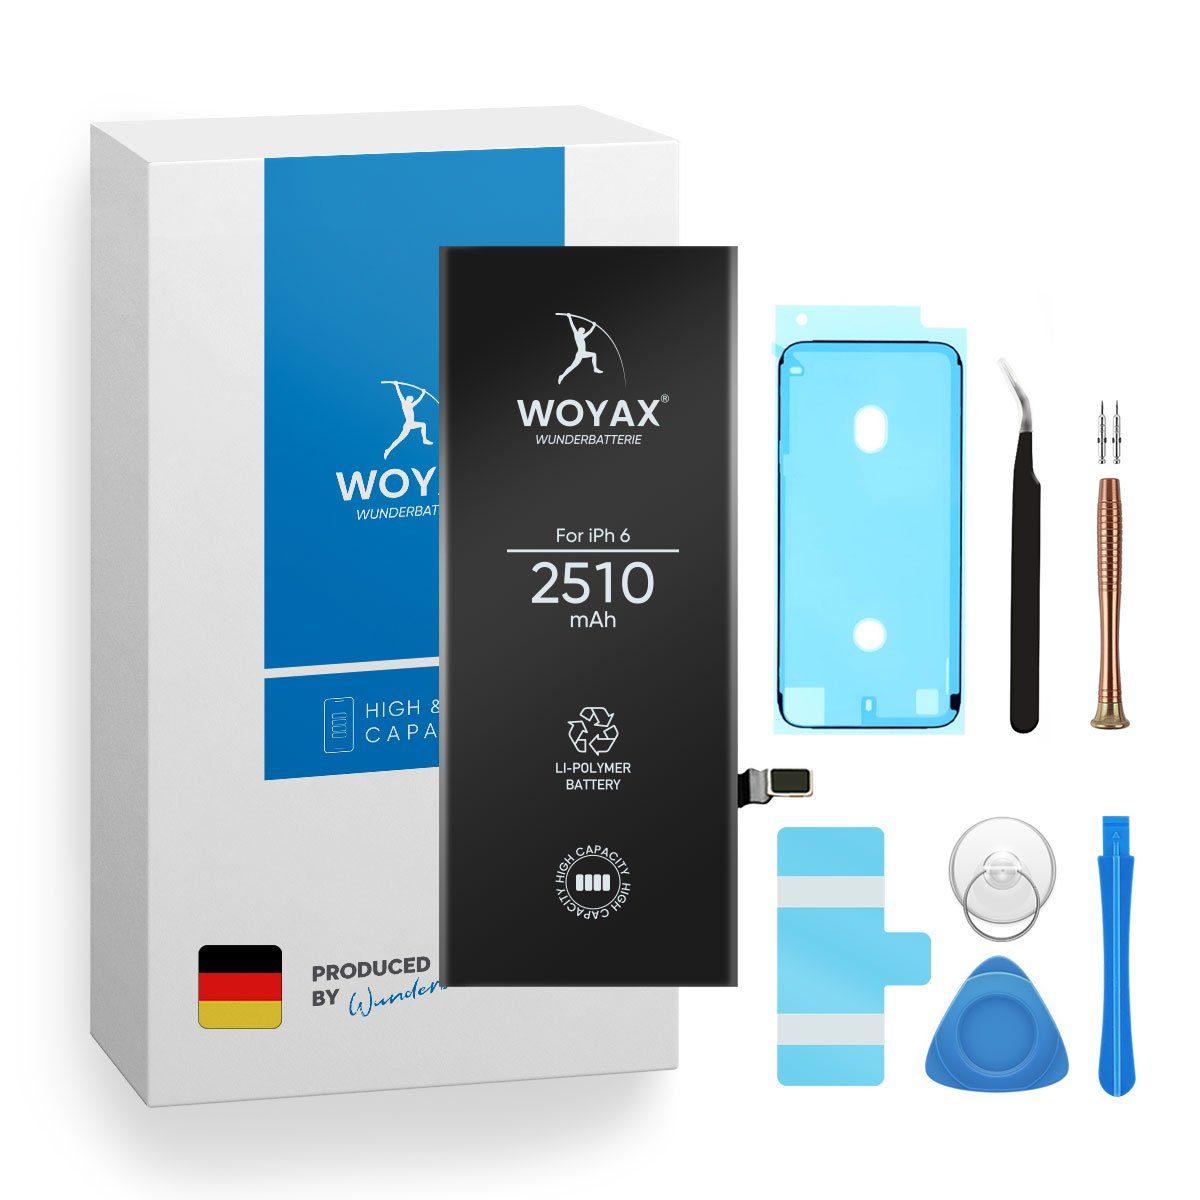 Woyax Wunderbatterie Akku für iPhone 6 2510 mAh Hohe Kapazität Ersatzakku Handy-Akku